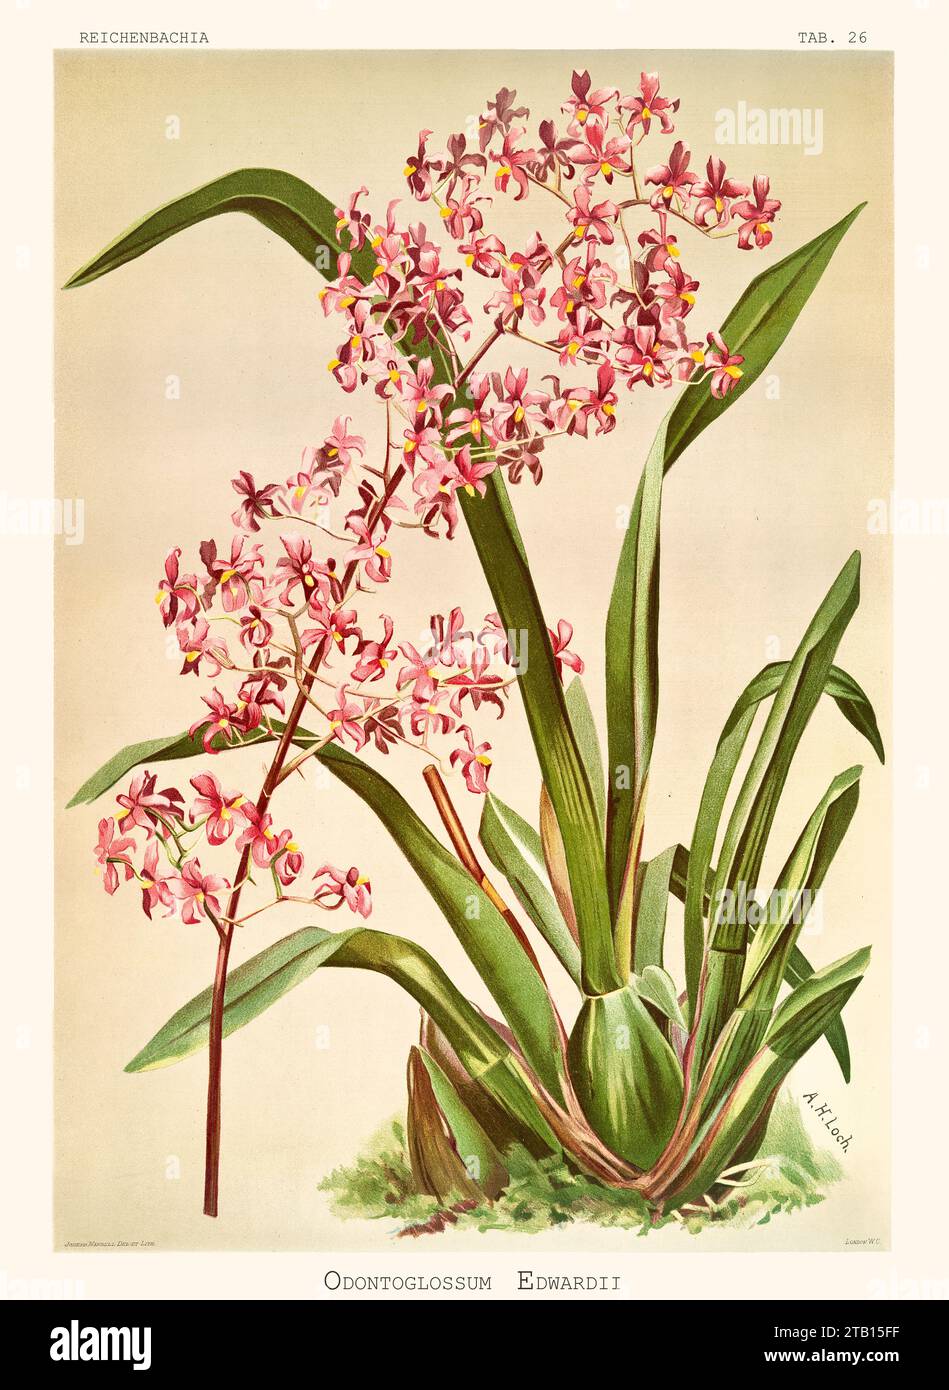 Old illustration of  Edward's Odontoglossum (Cyrtochilum edwardii). Reichenbachia, by F. Sander. St. Albans, UK, 1888 - 1894 Stock Photo